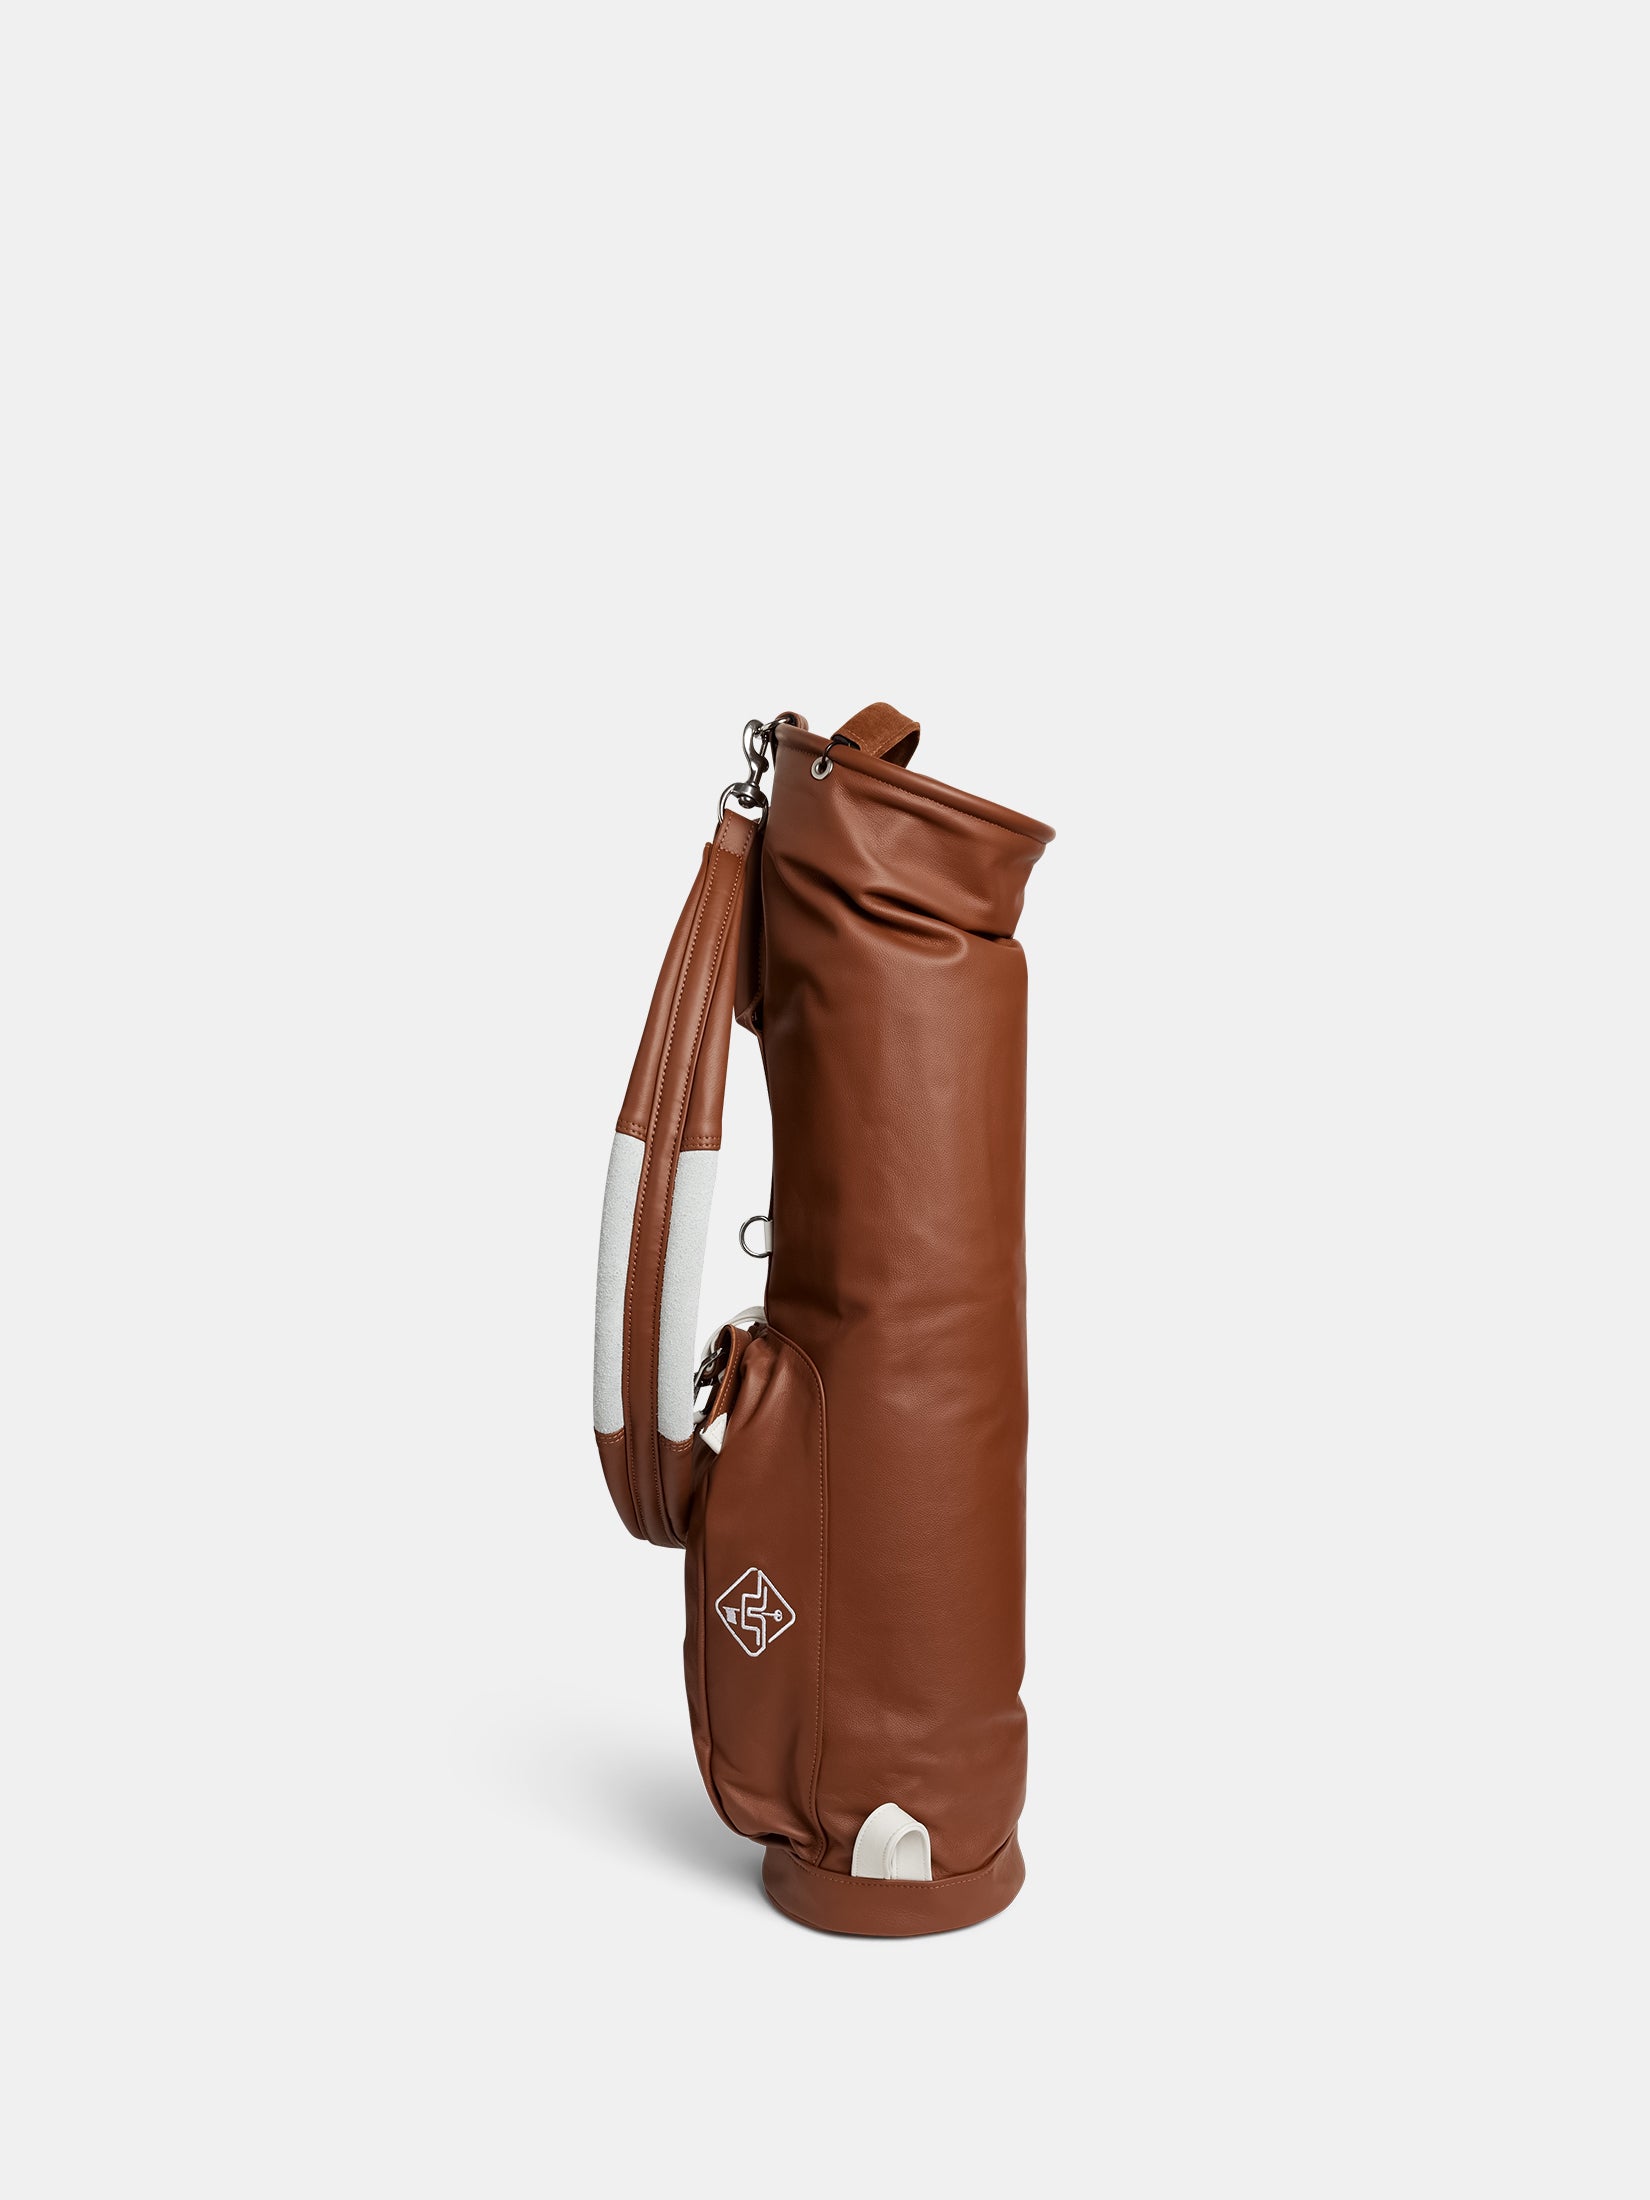 eGolf Megastore - The #JLindeberg X #Vessel bags collaboration has